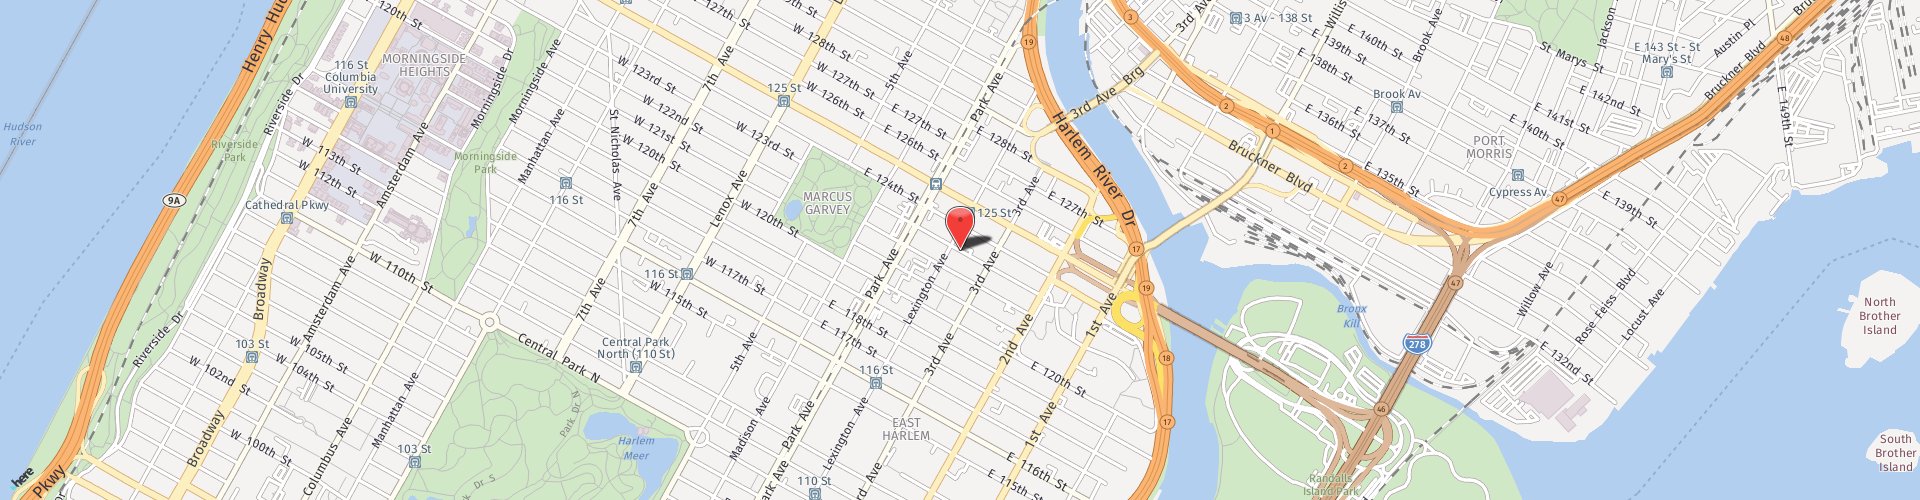 Location Map: 123 Some Street Manhattan, NY 10009